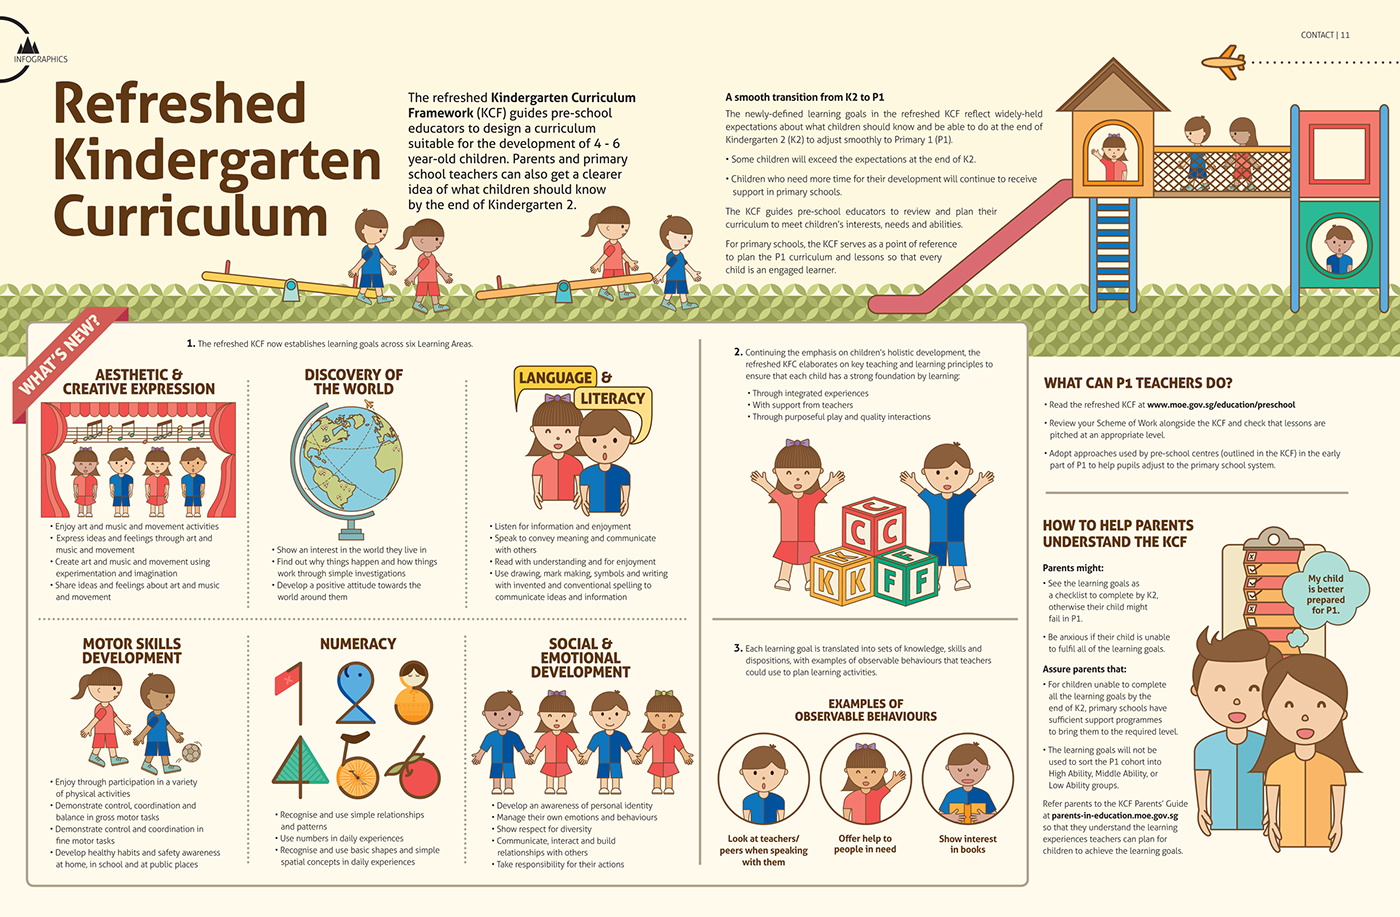 Refreshed Kindergarten Curriculum on Behance